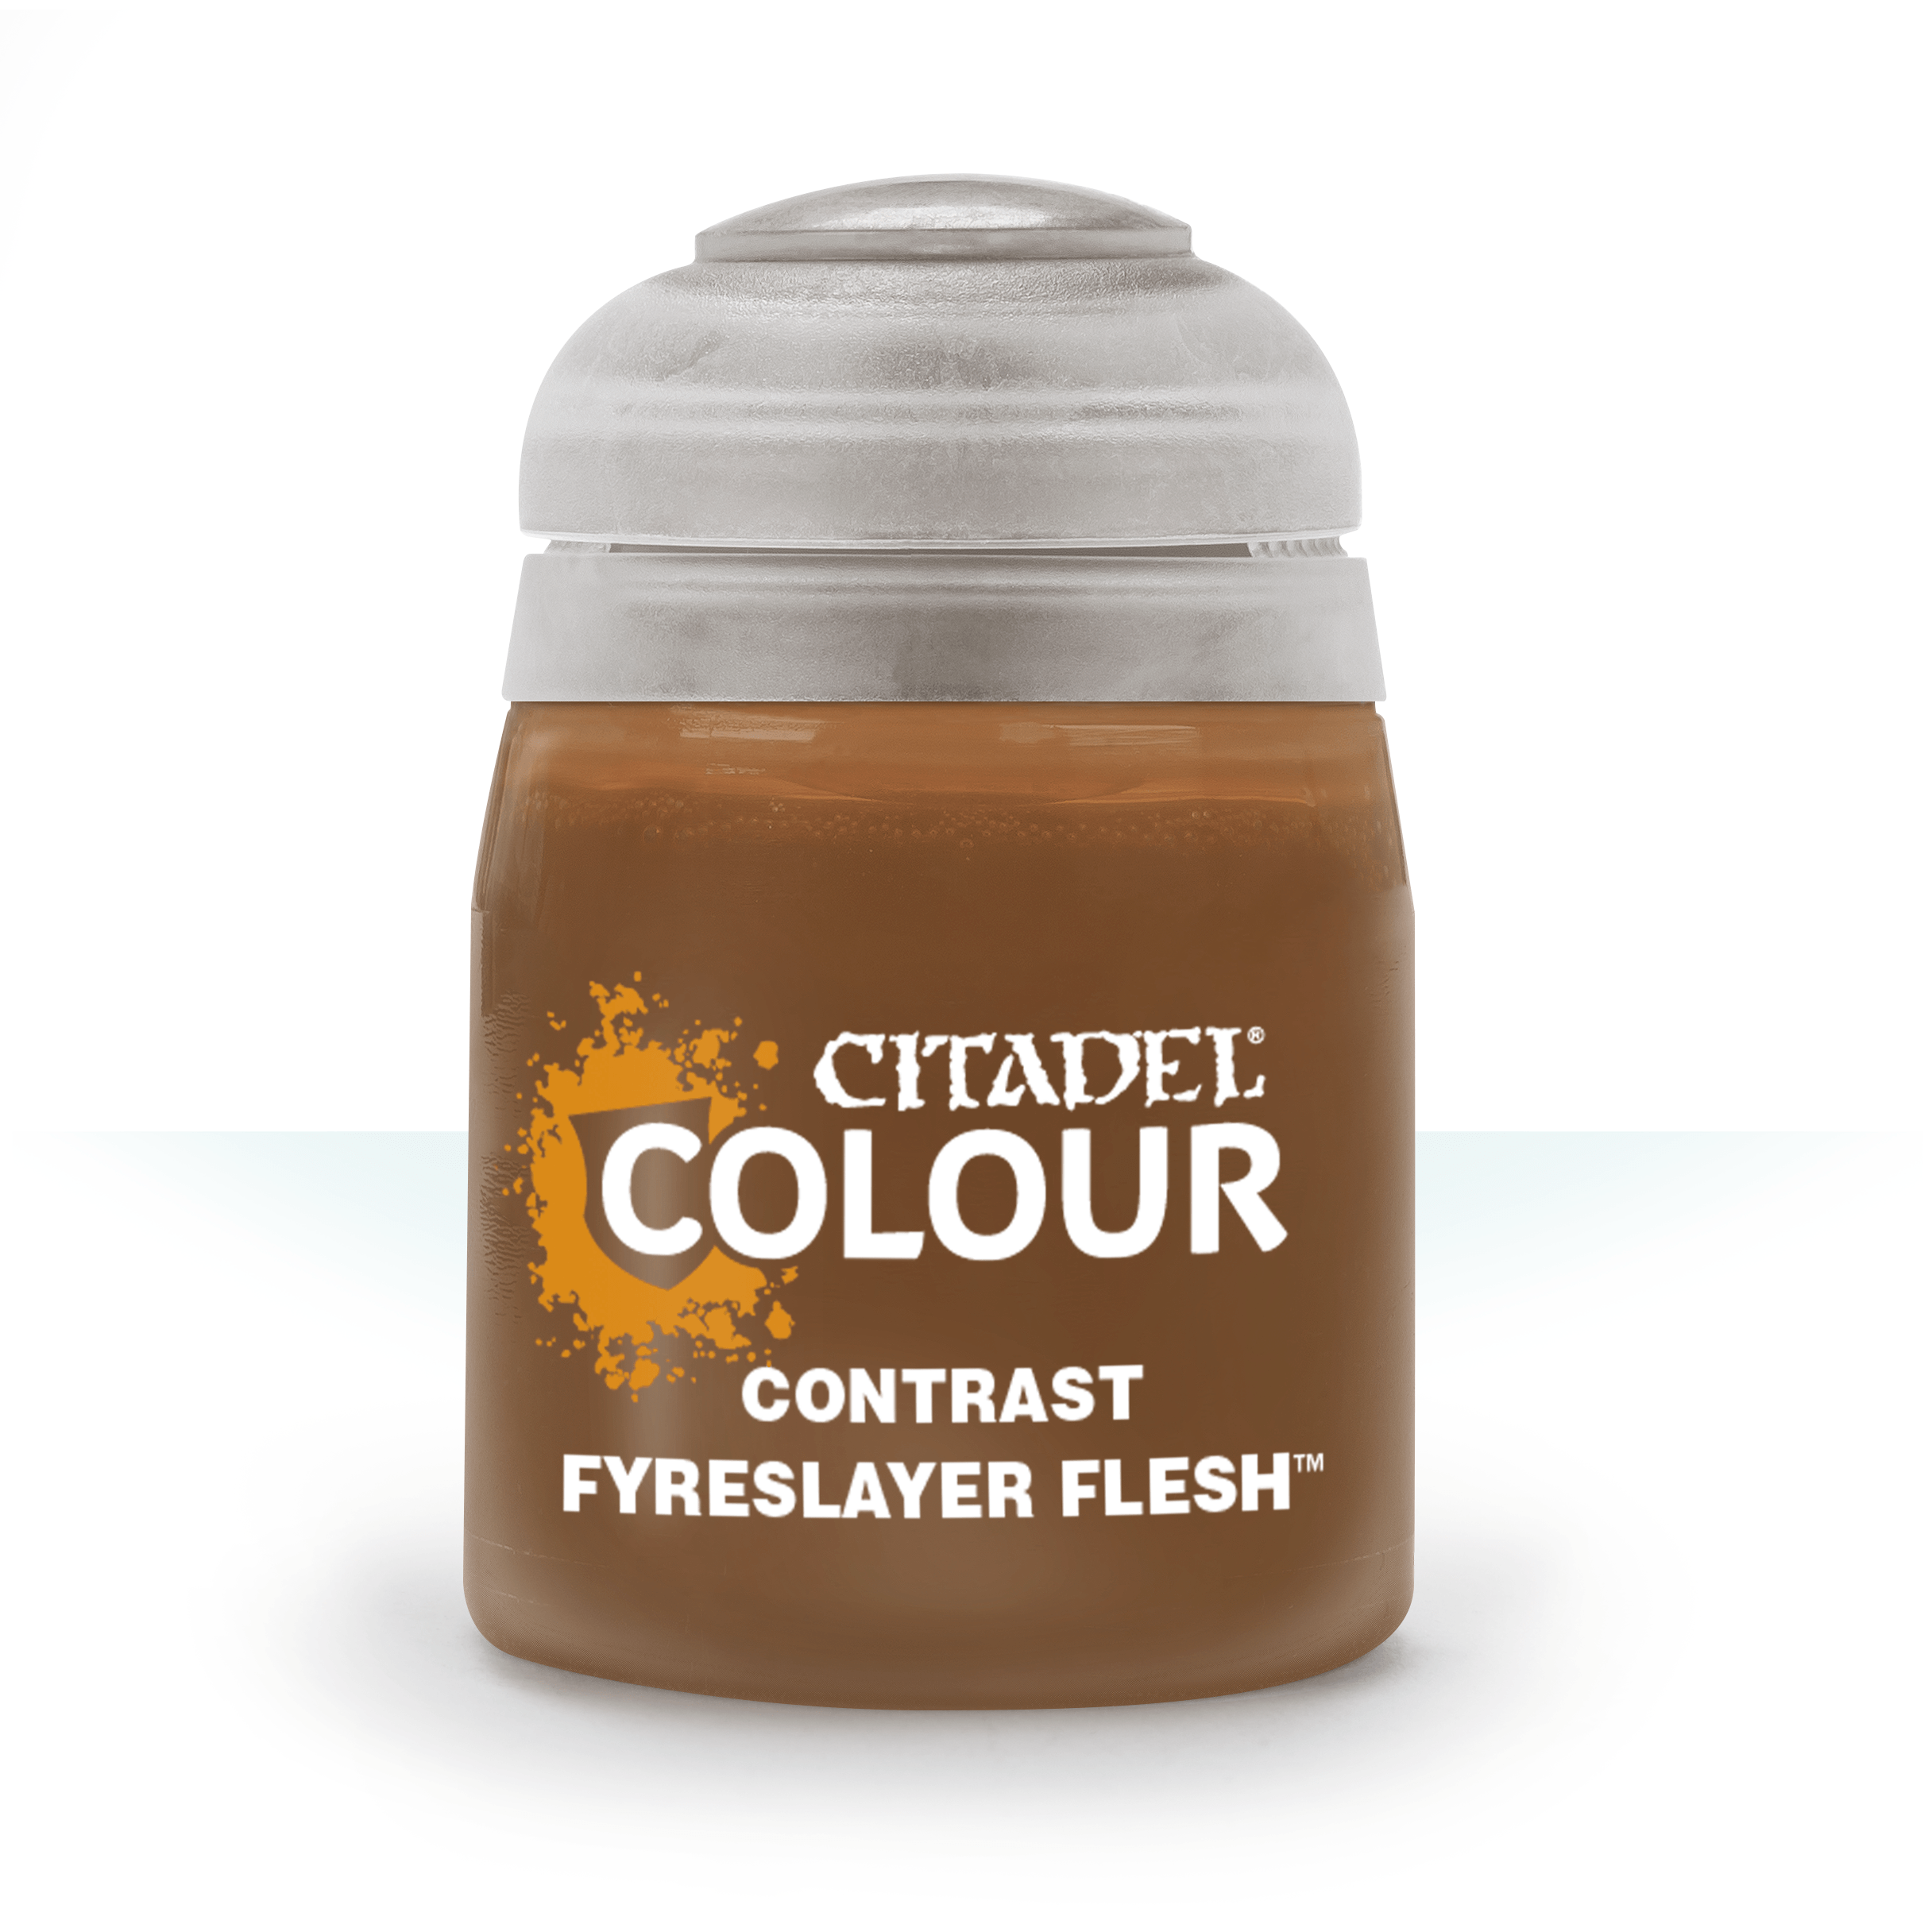 Contrast Fyreslayer Flesh - Citadel Colour